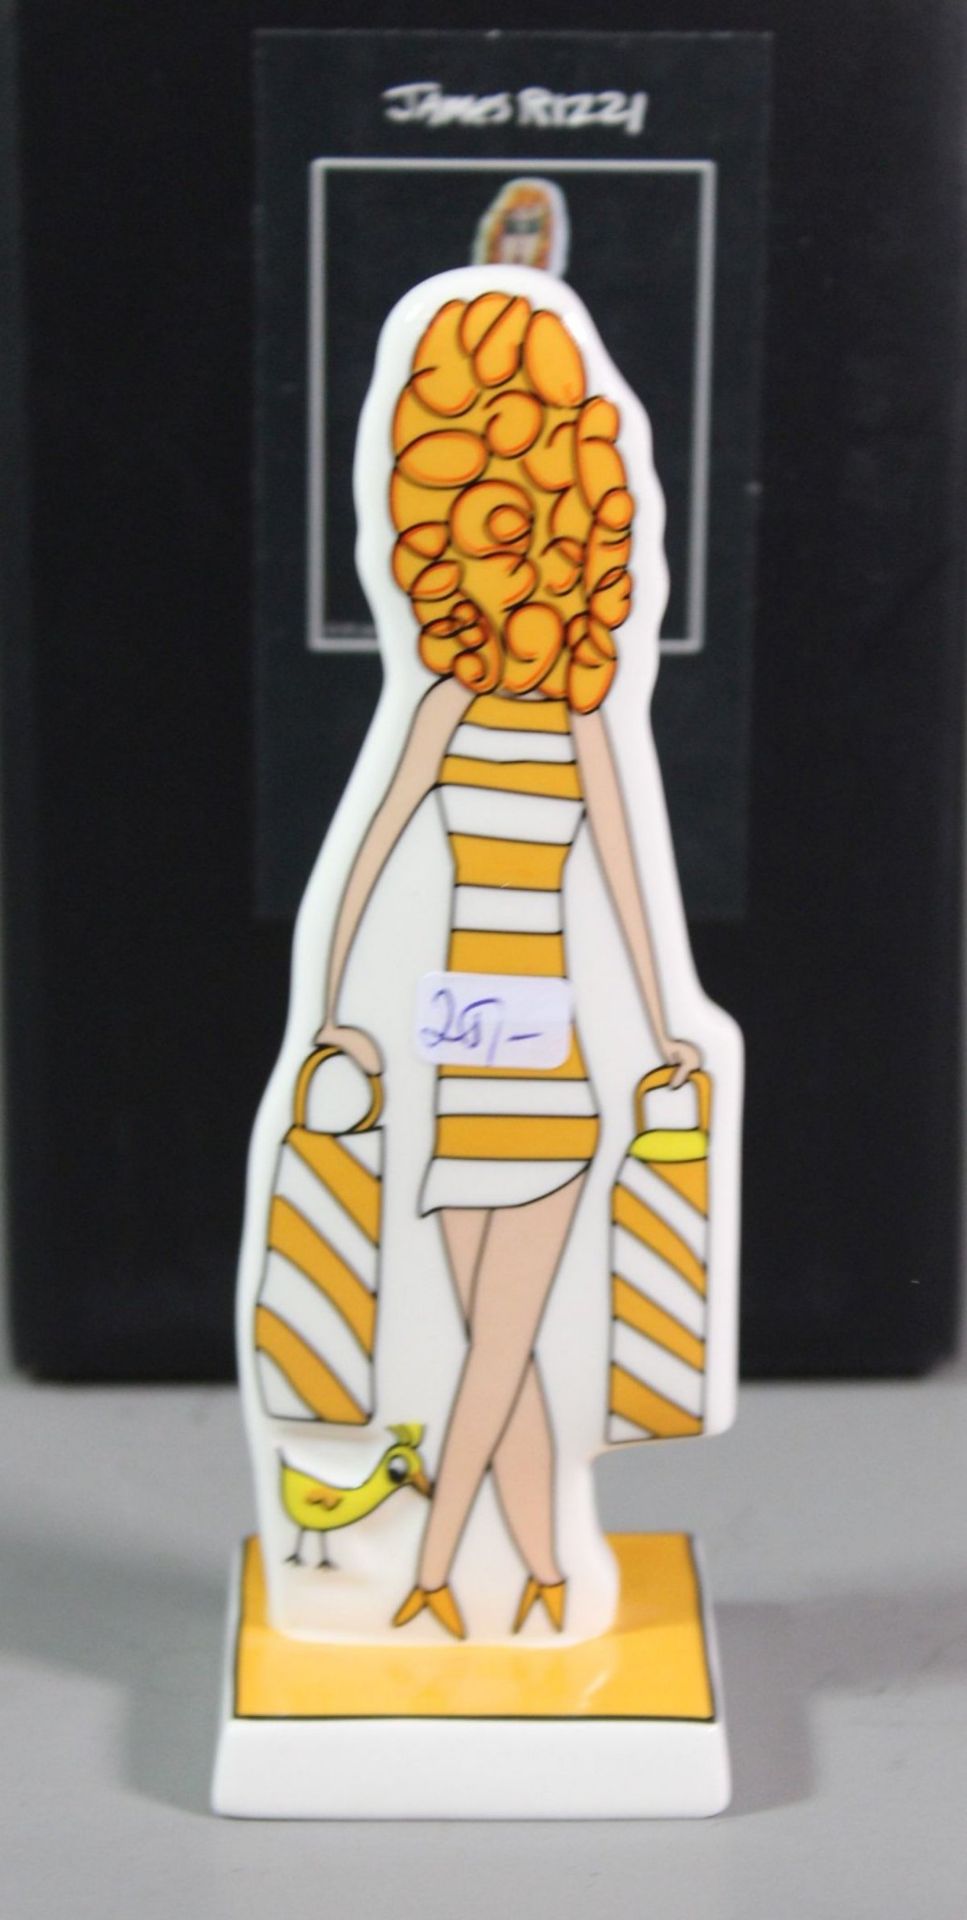 Goebel-Figur "Shopping Girl", Artis Orbis, Entw. James Rizzi, orig. Karton, ca. H-13,5cm. - Bild 2 aus 3